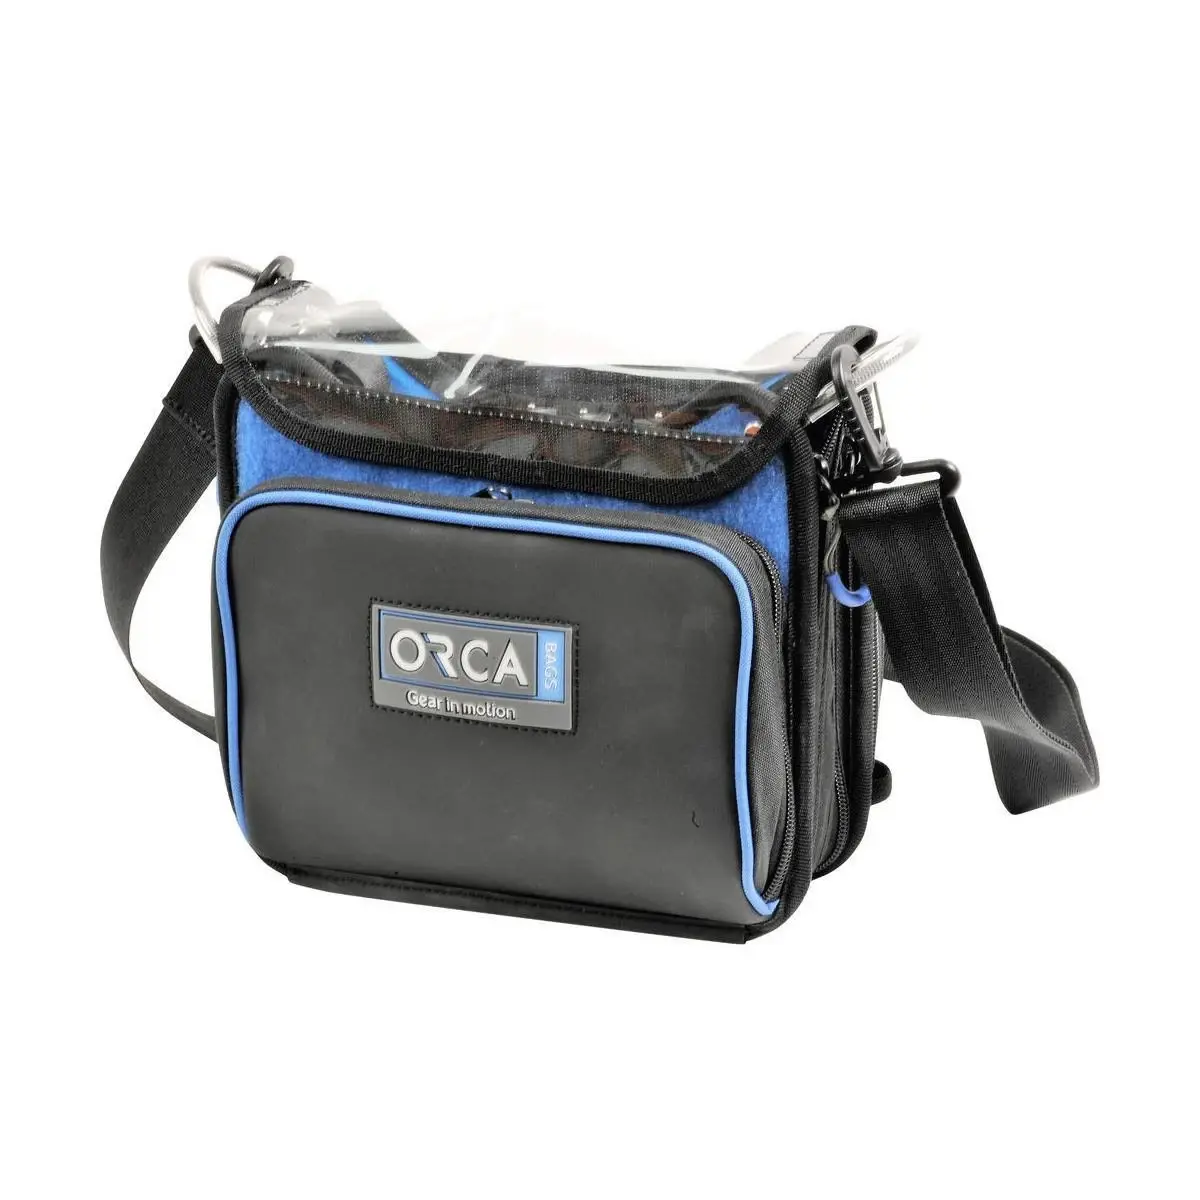 Orca OR-270 Low Profile Audio Mixer Bag